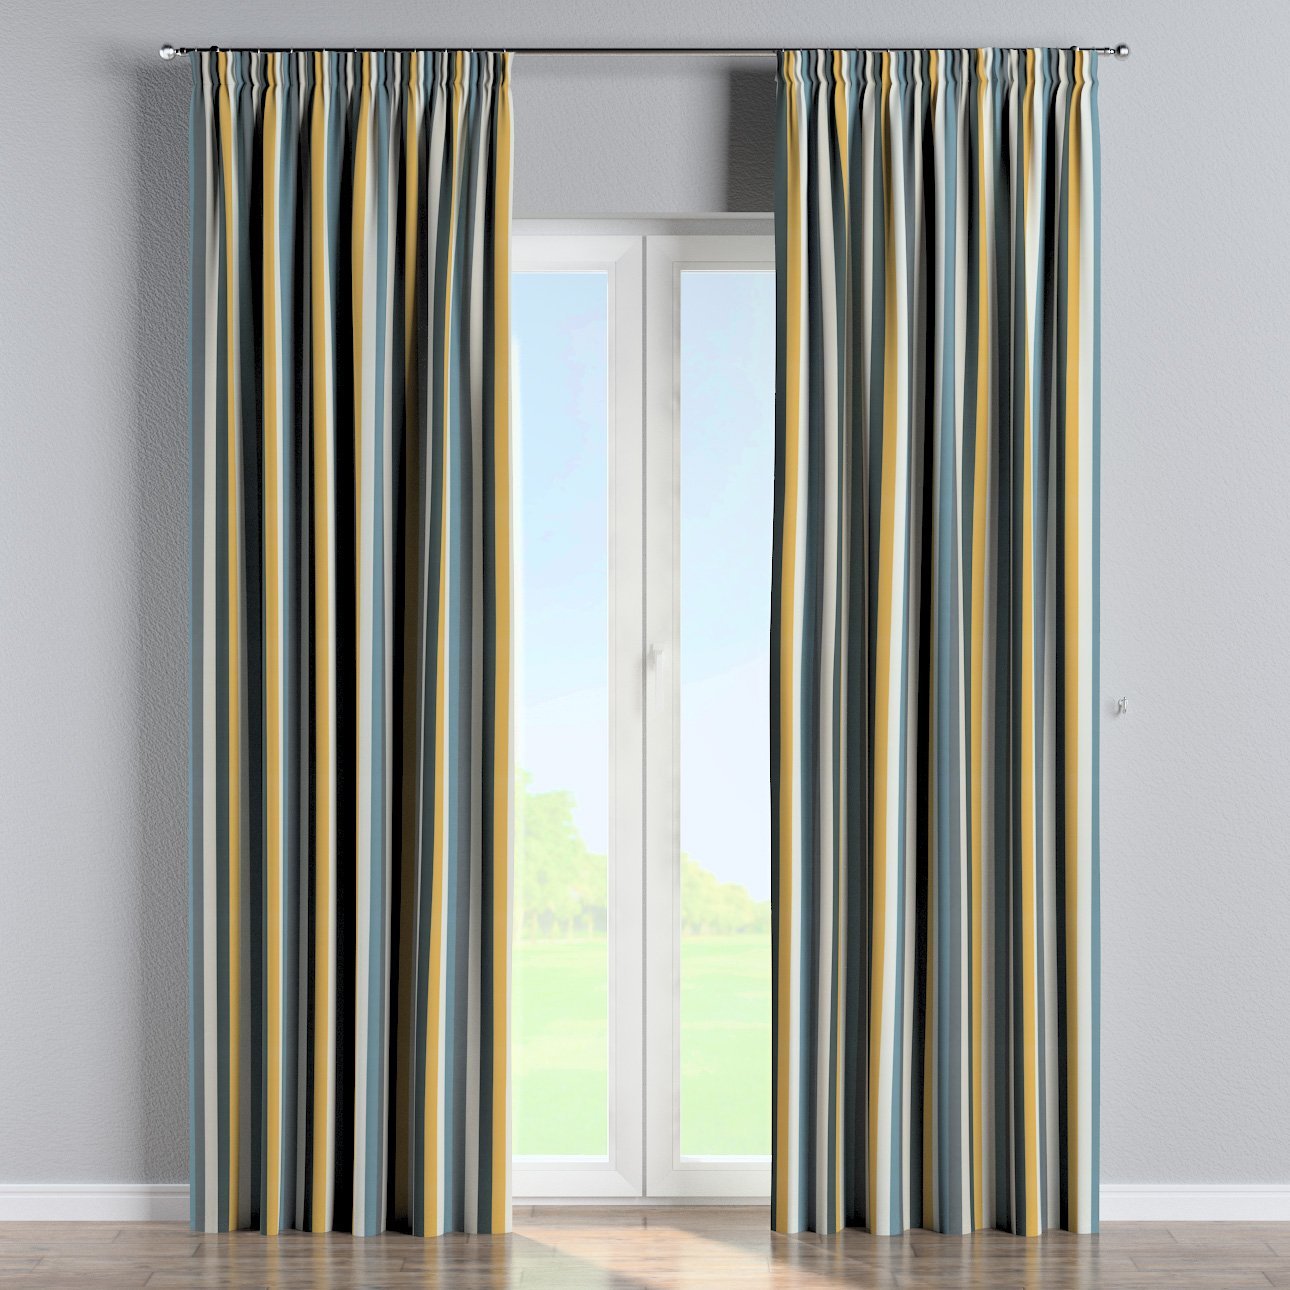 Vorhang mit Kräuselband, blau-gelb-grau, 143-59